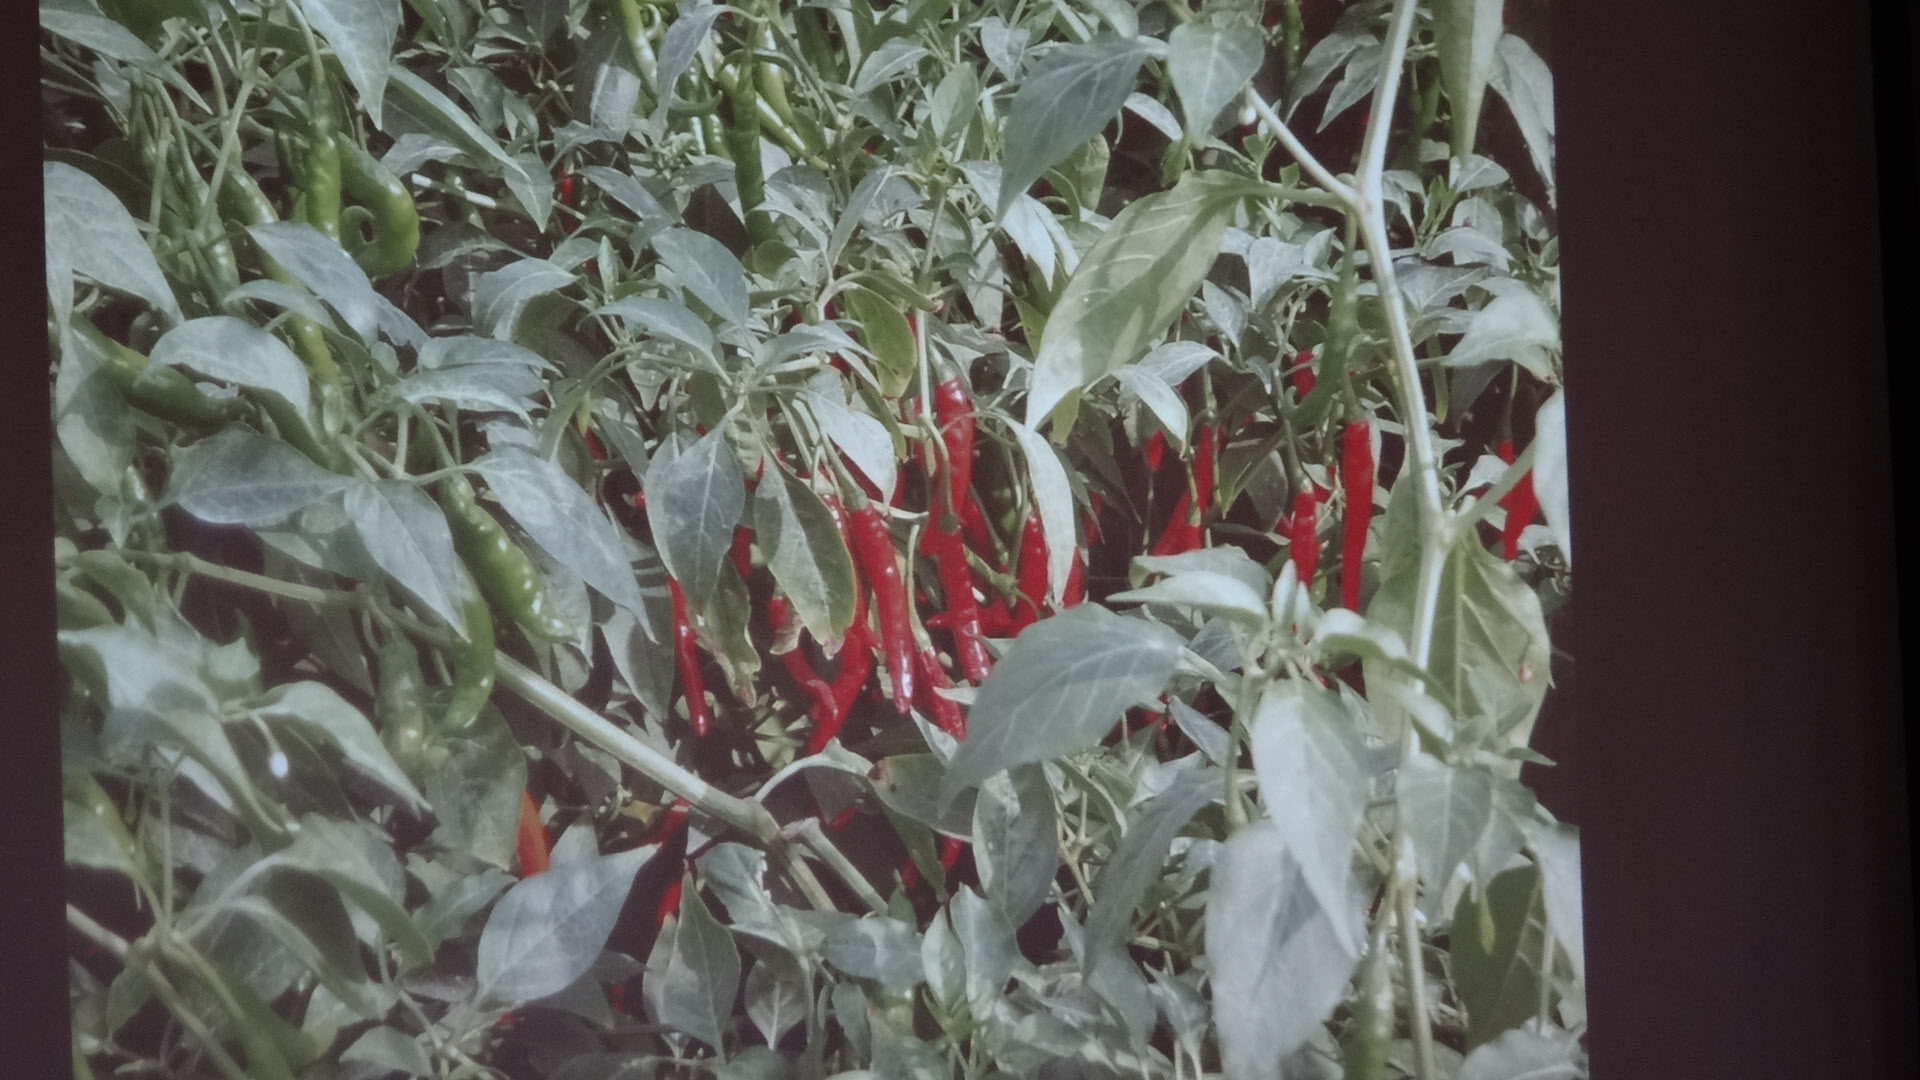 Hot Chili pepper.